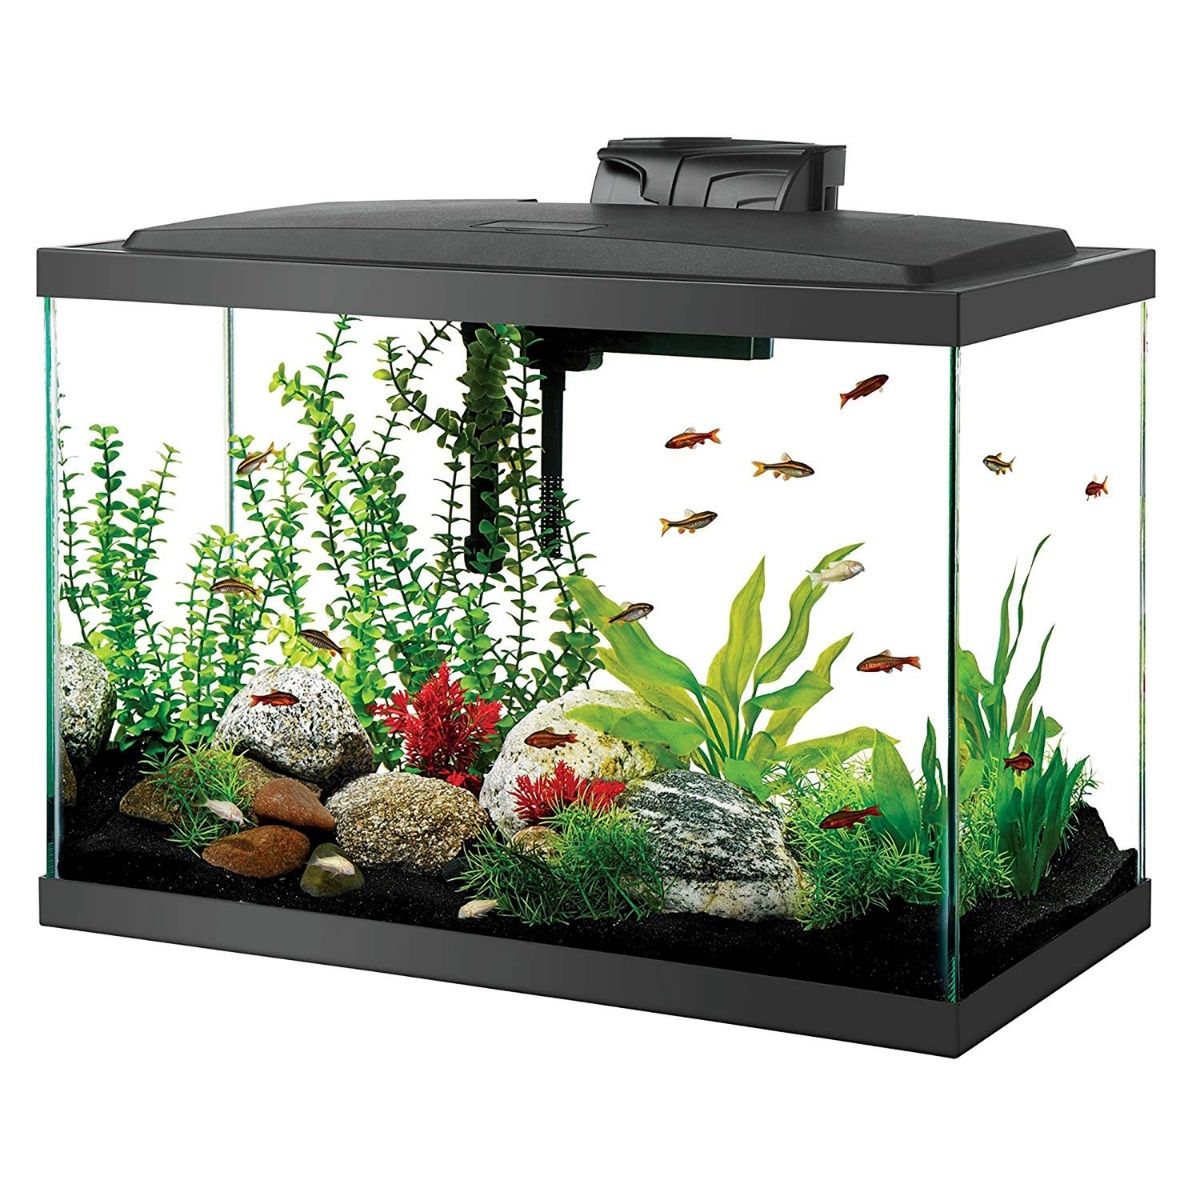 The Best Betta Fish Tanks Options: Aqueon Aquarium Starter Kit 